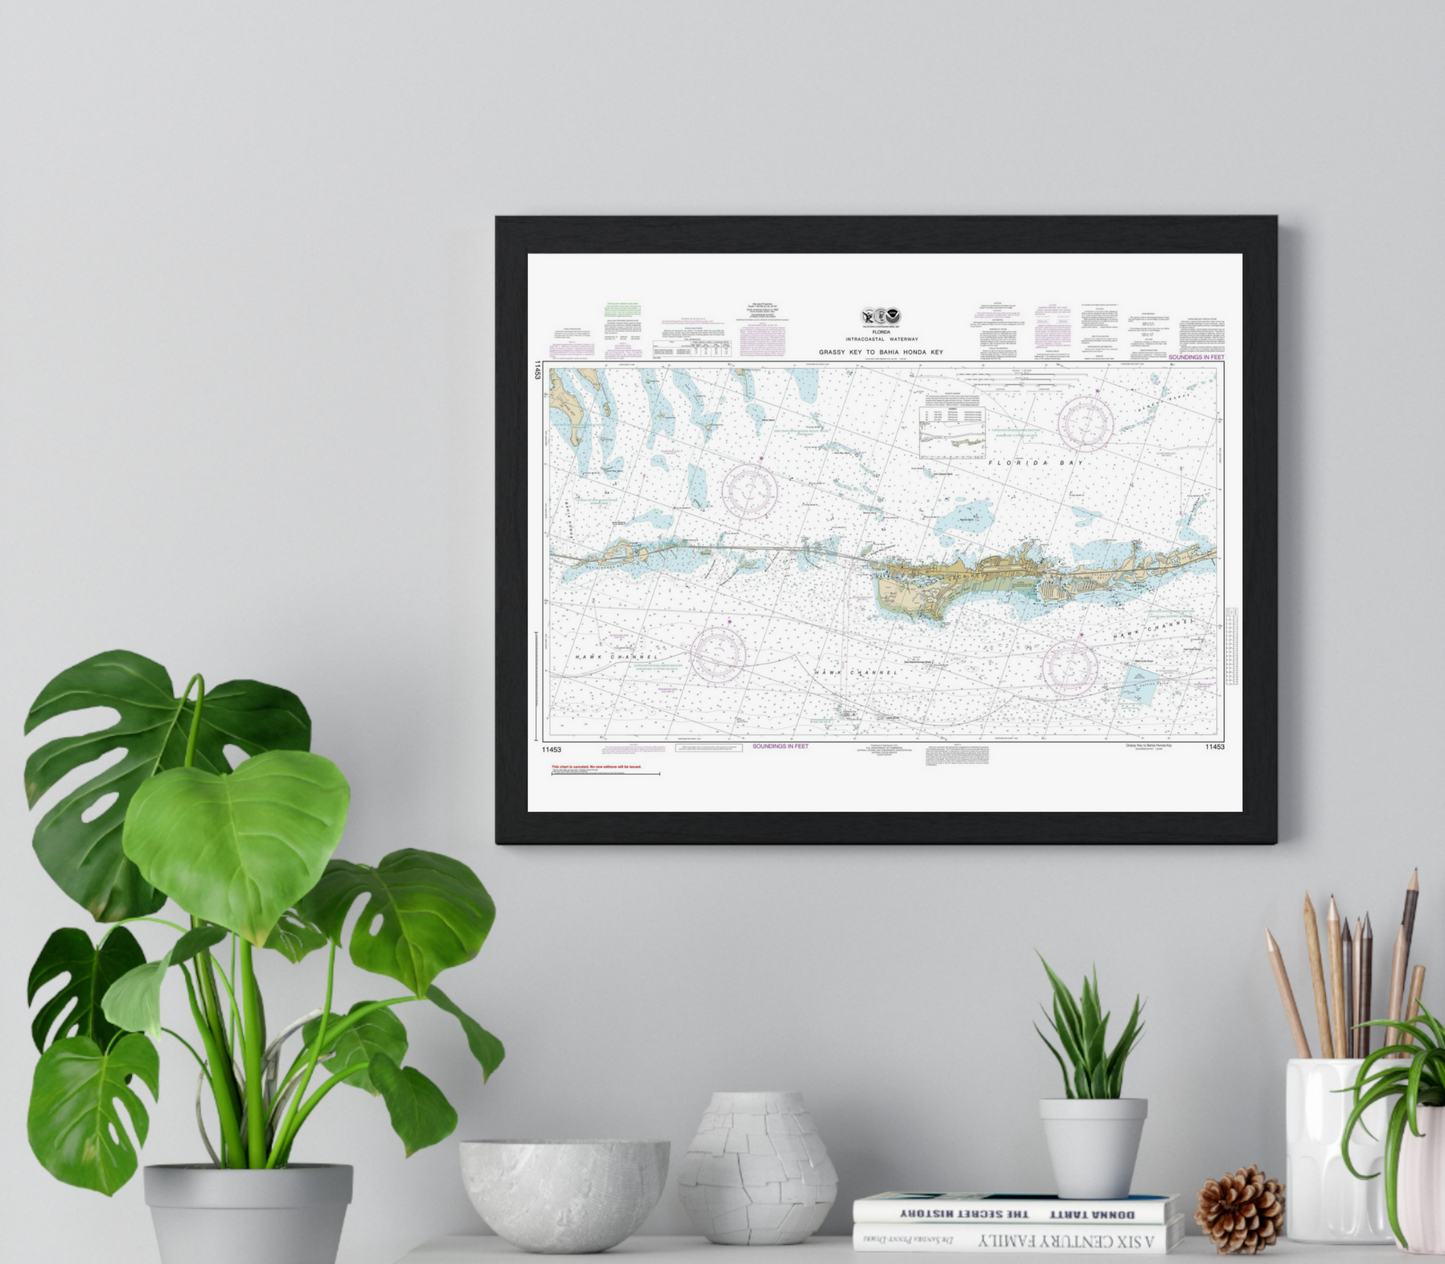 Grassy Key to Bahia Honda Map - Middle Keys - Marathon Map Print Wall Art - Frame optional